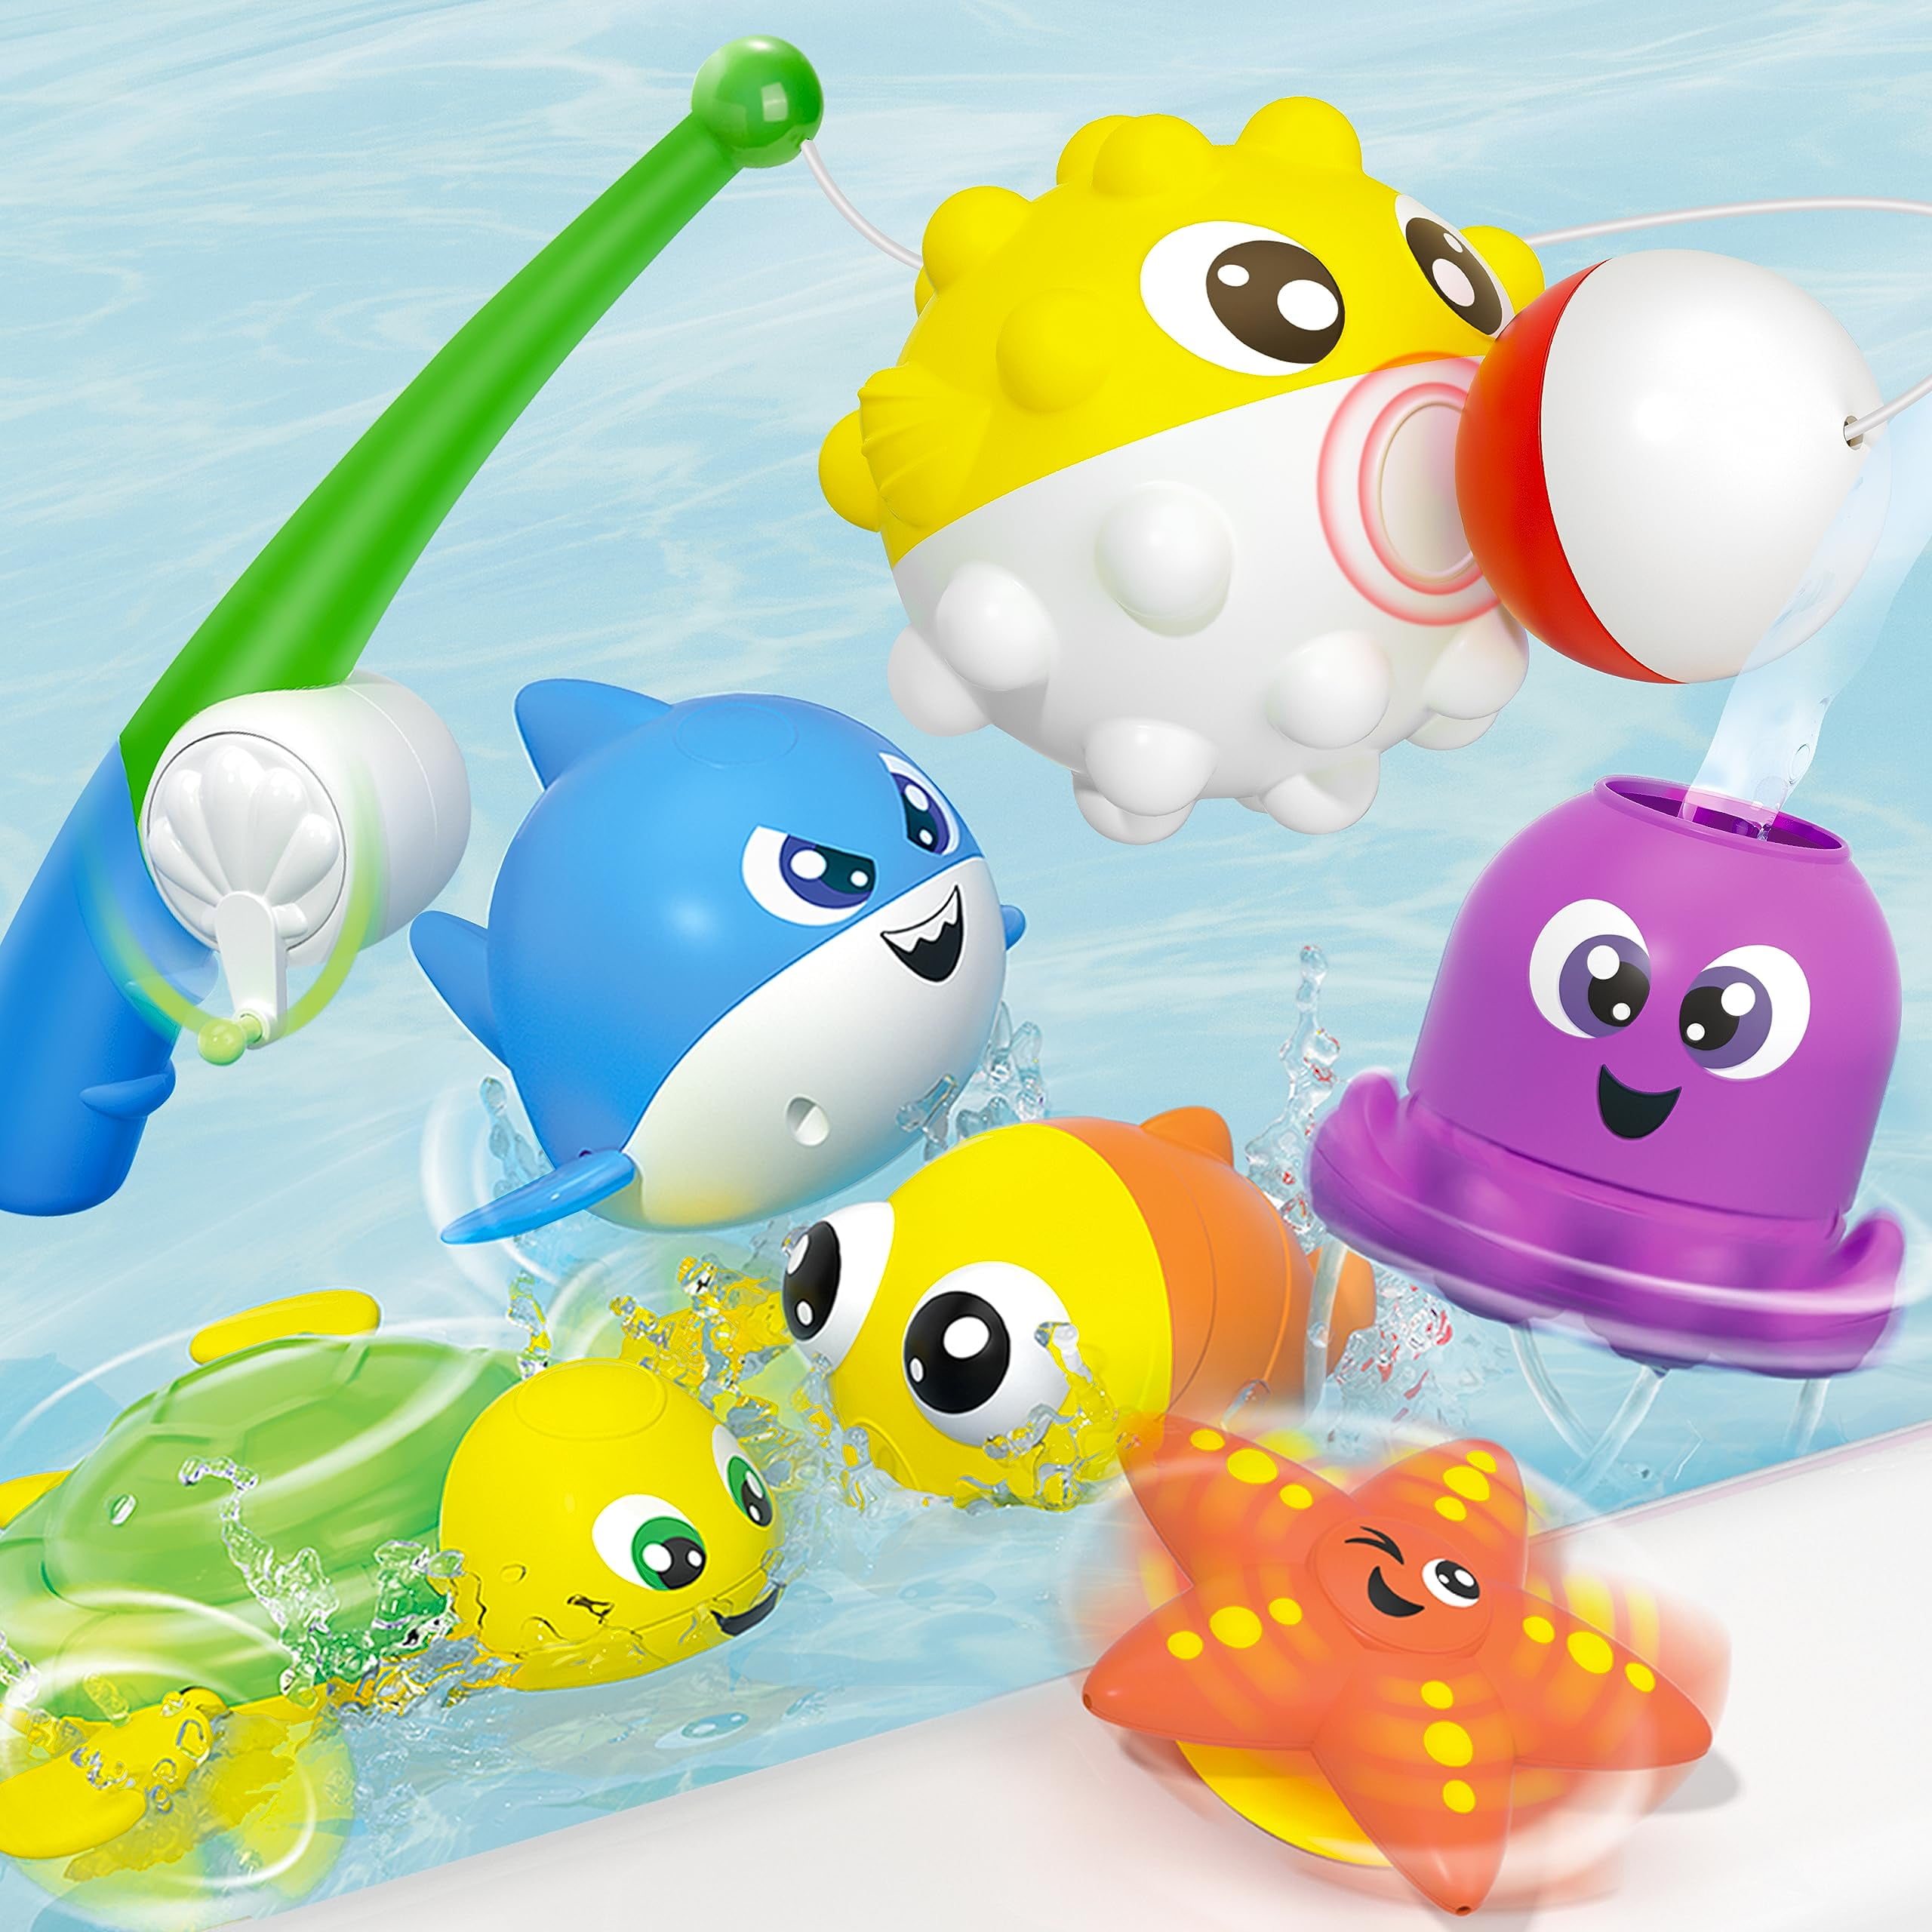 JOYIN Baby Bath Toy Set - Magnetic Fishing Toy with Fishing Rod